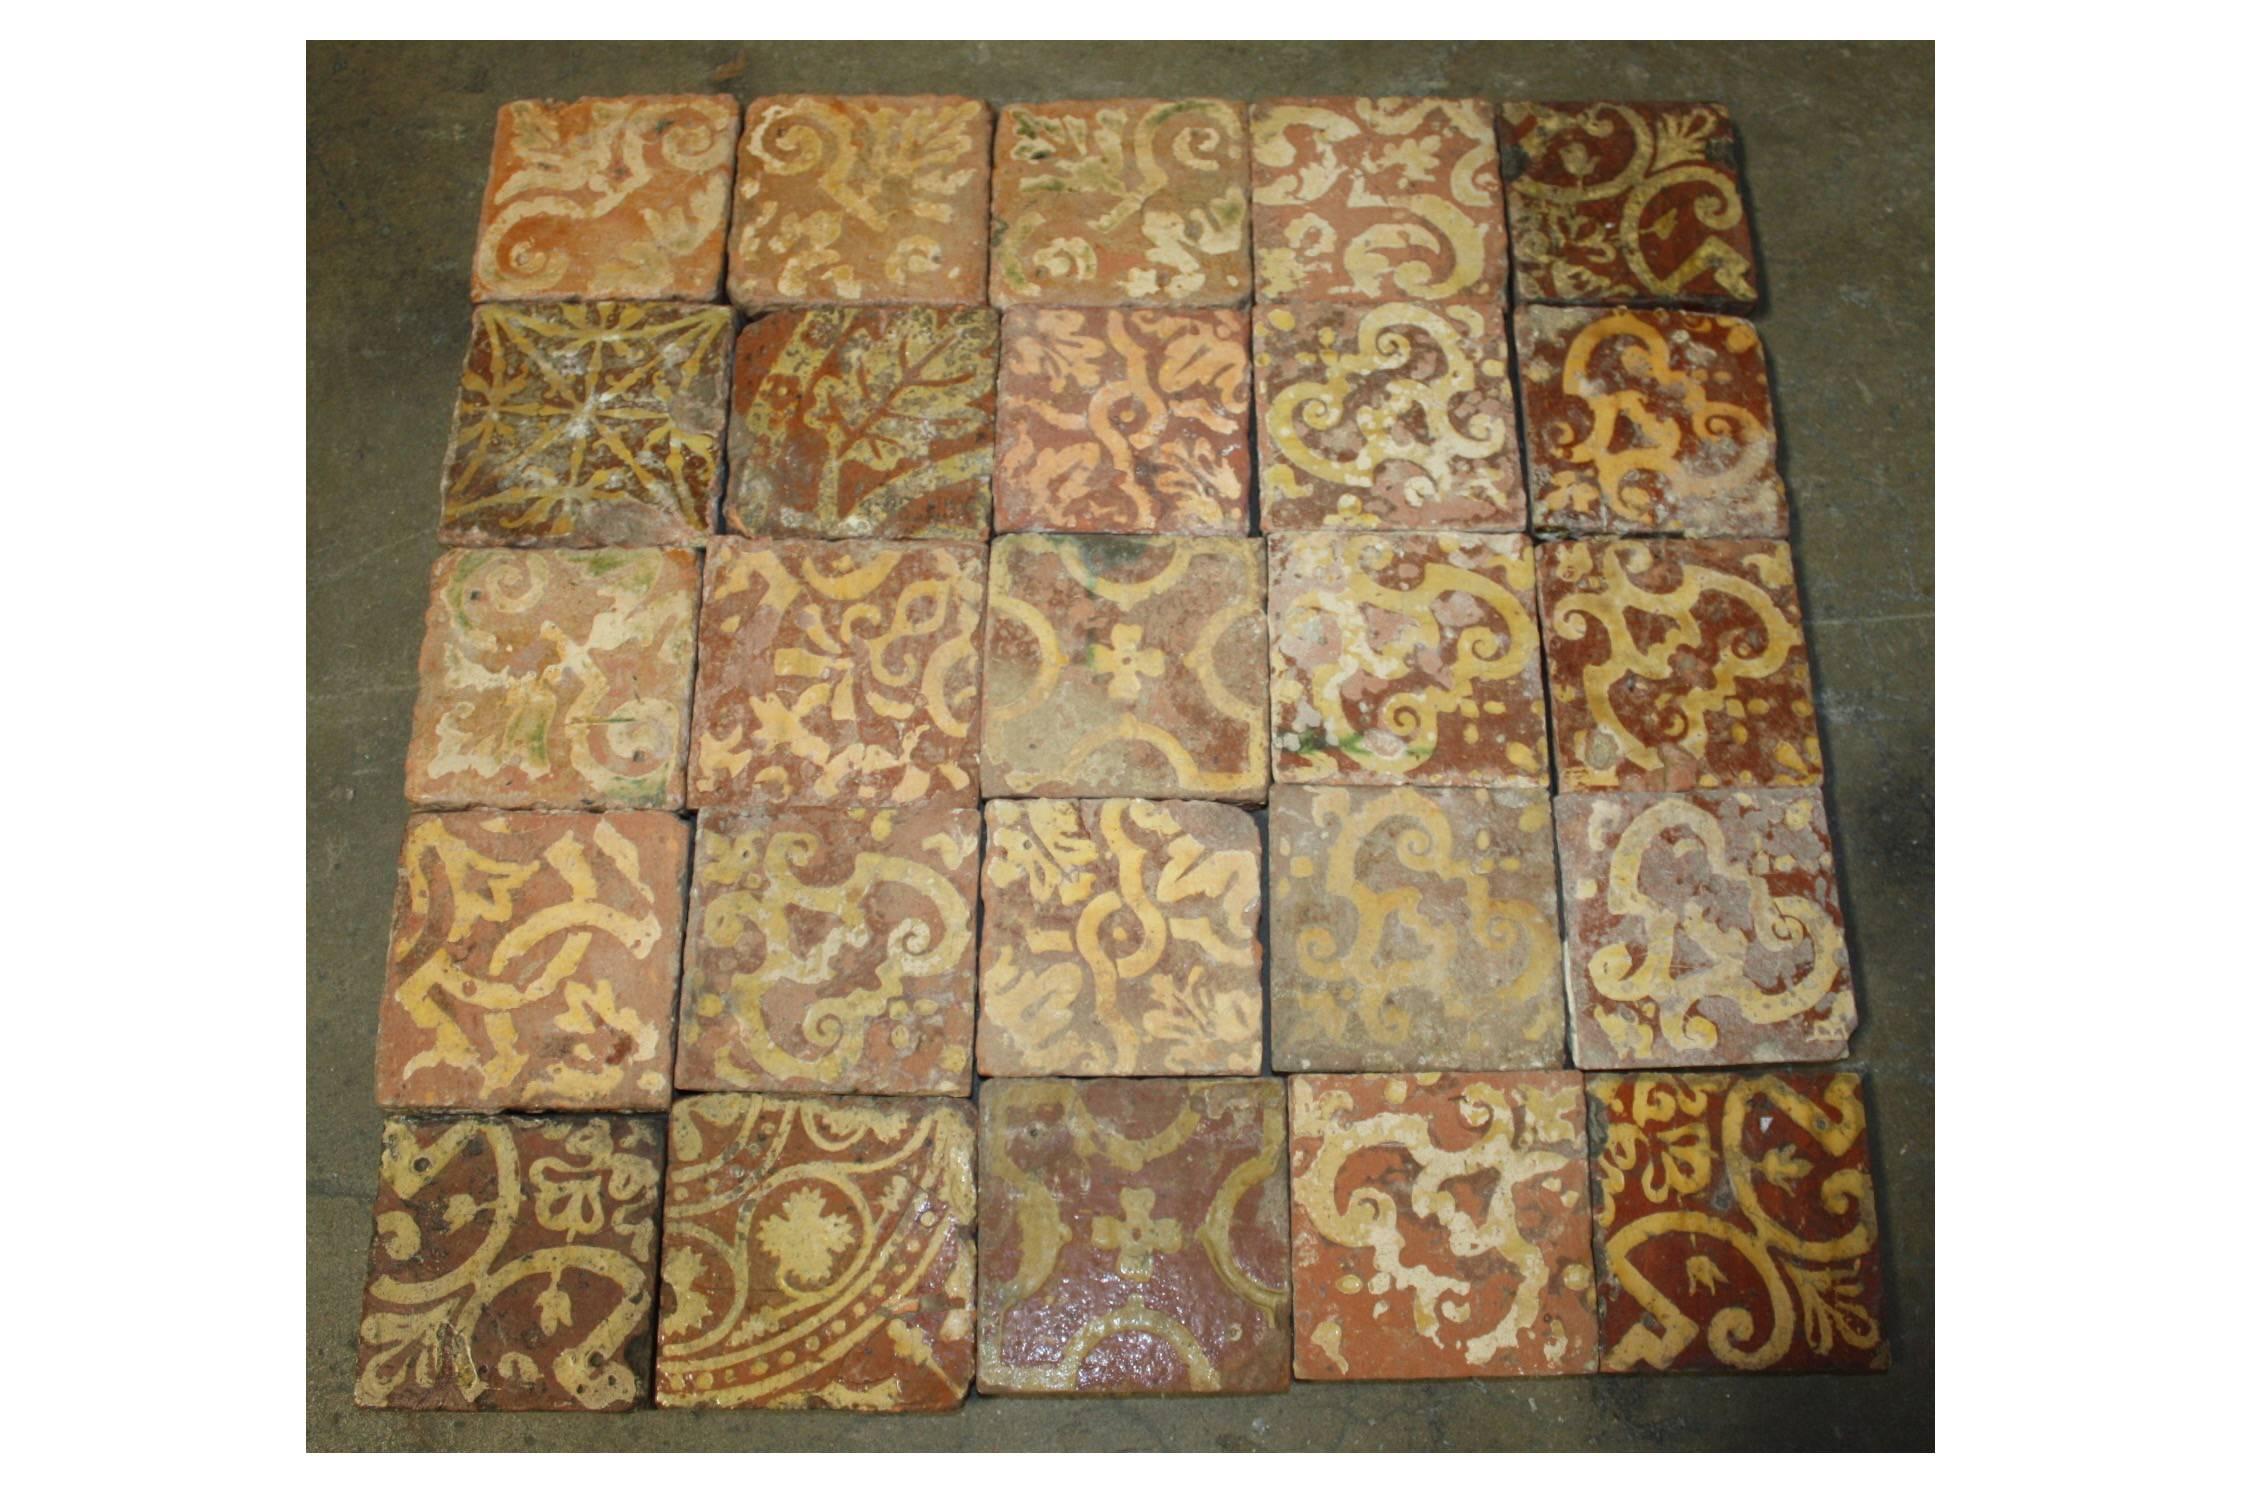 16th century French terracotta tiles.